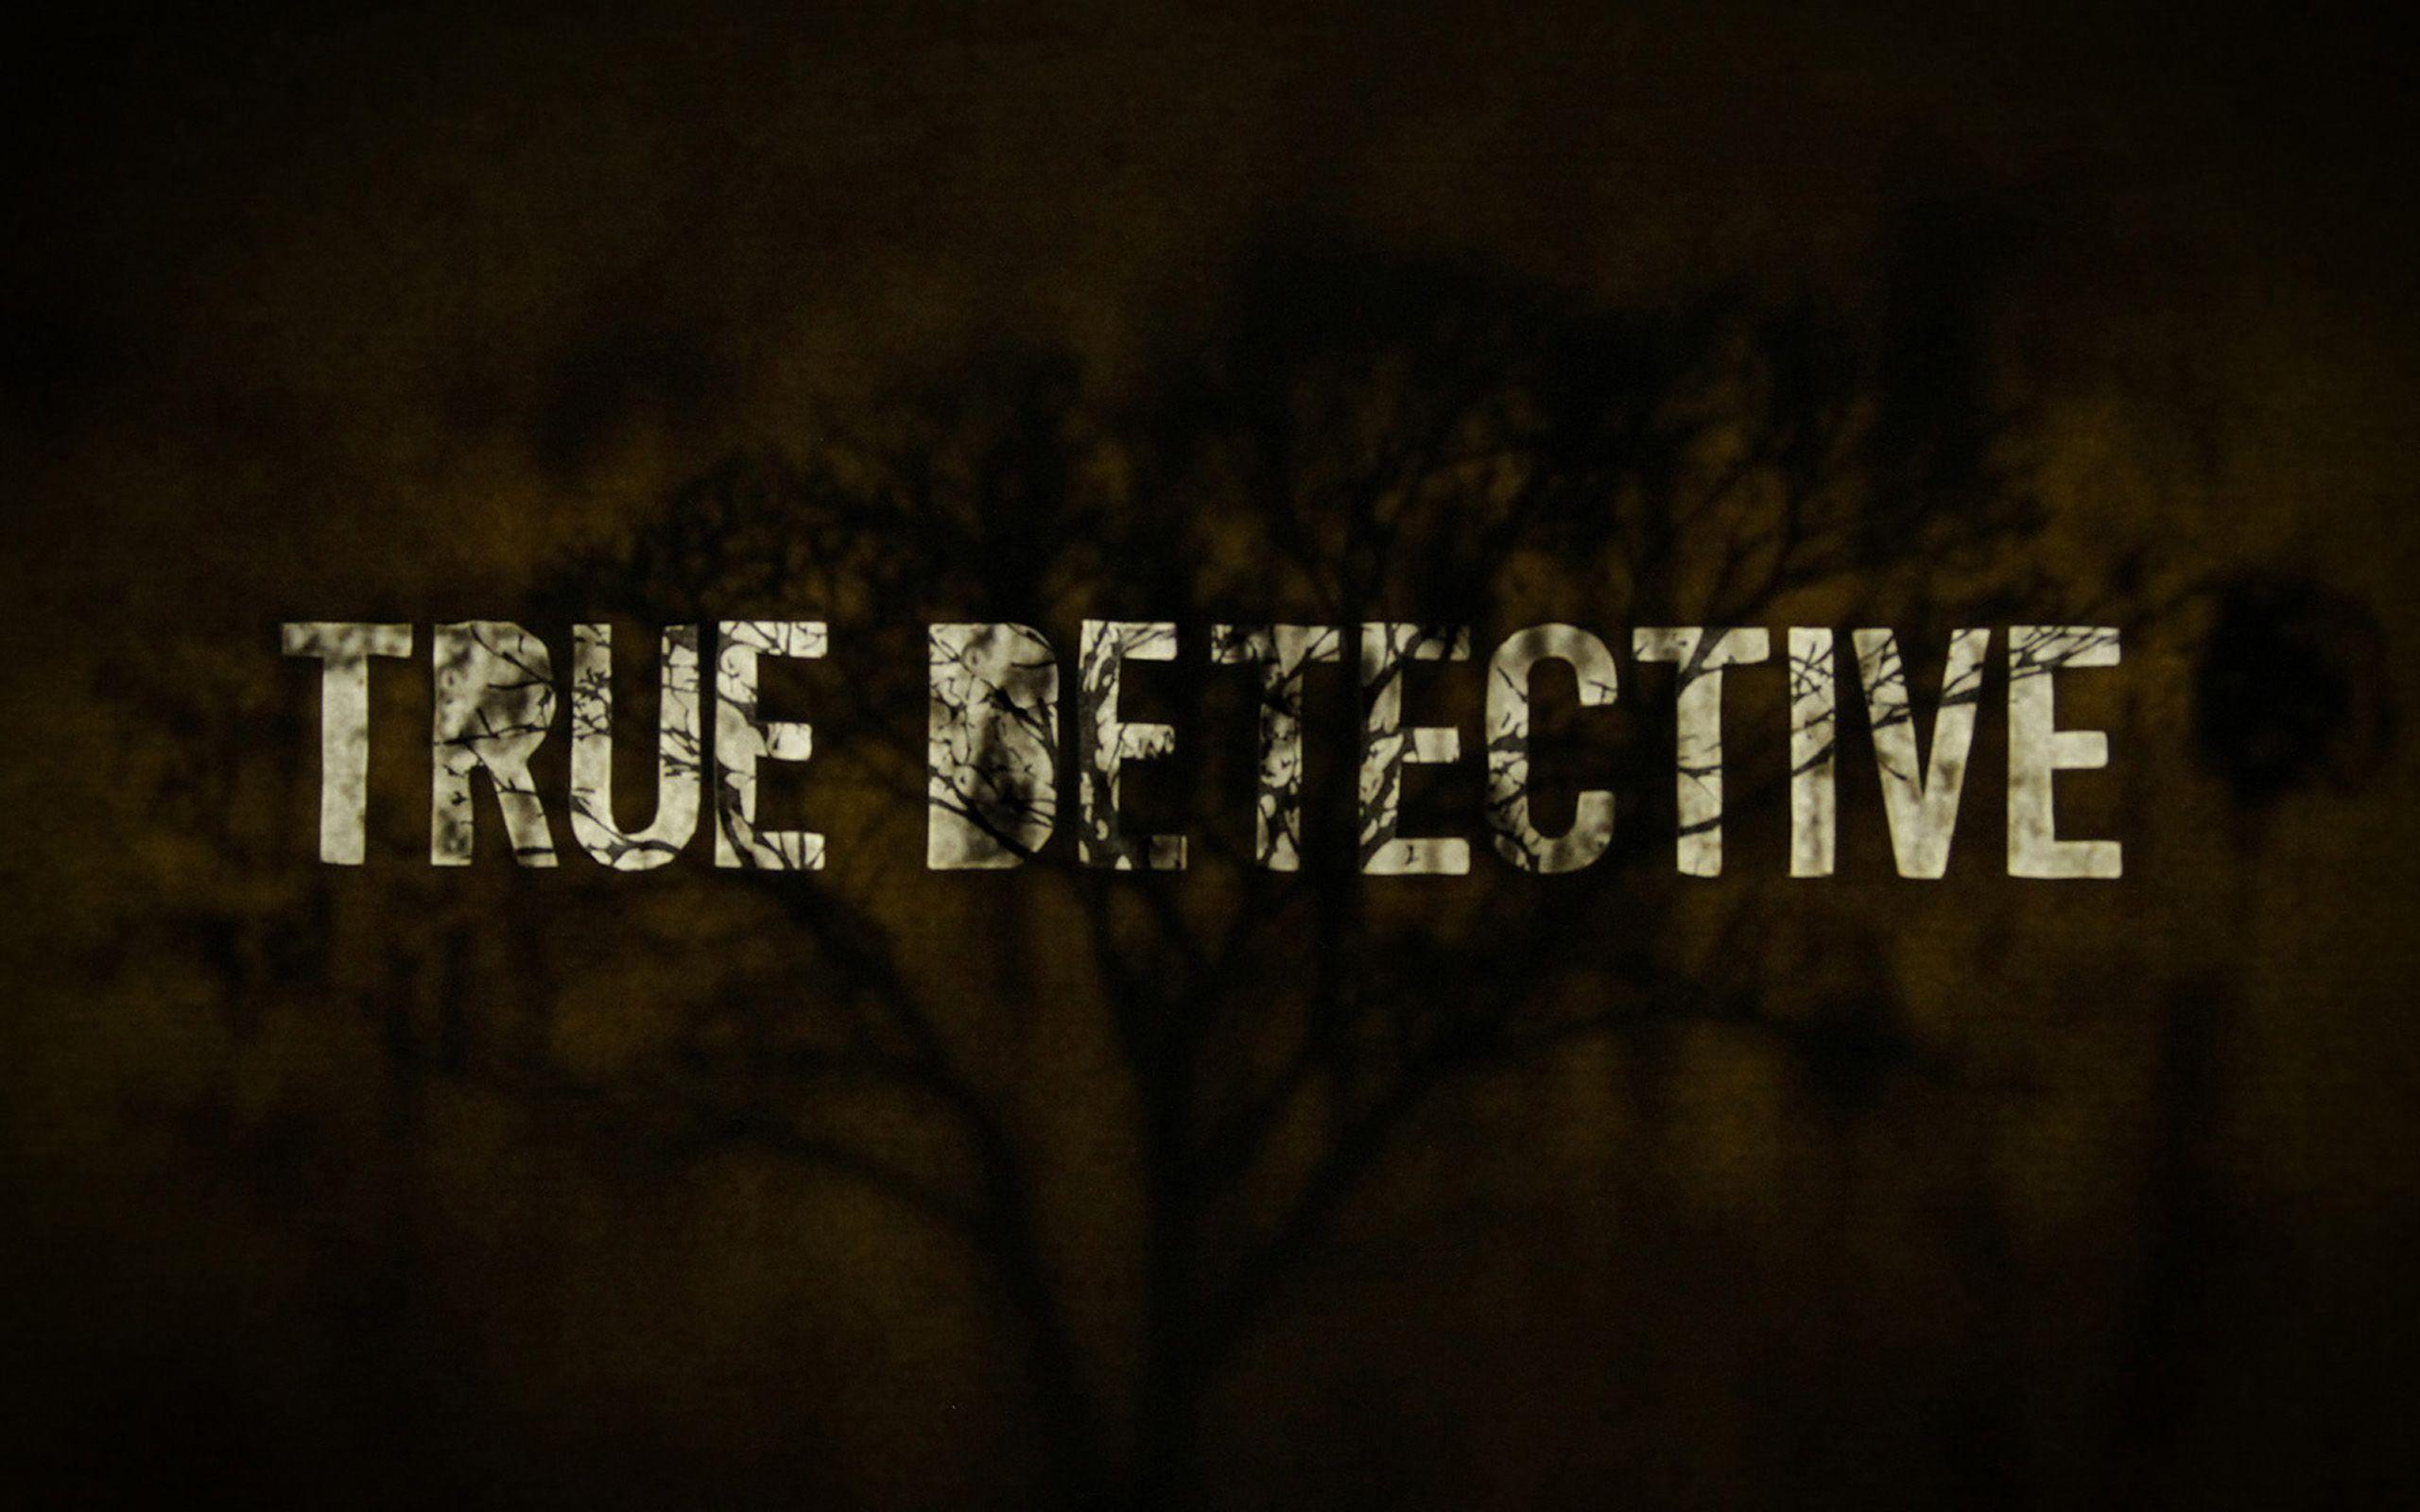 True Detective Wallpaper